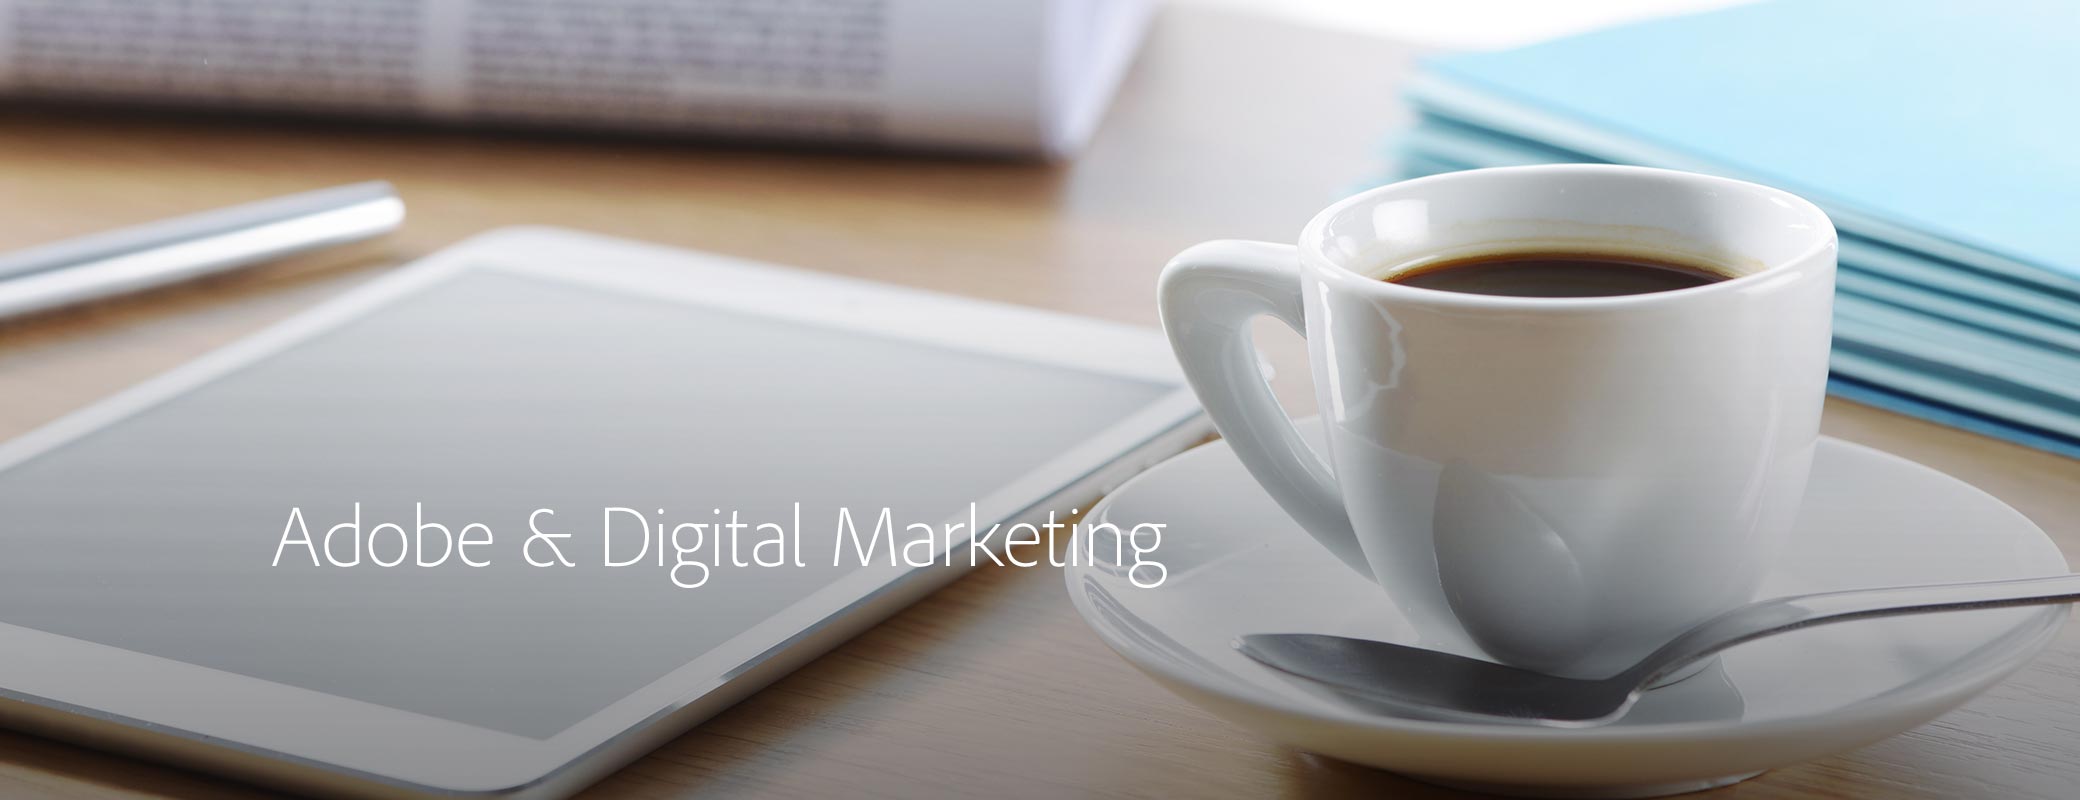 Adobe & Digital Marketing